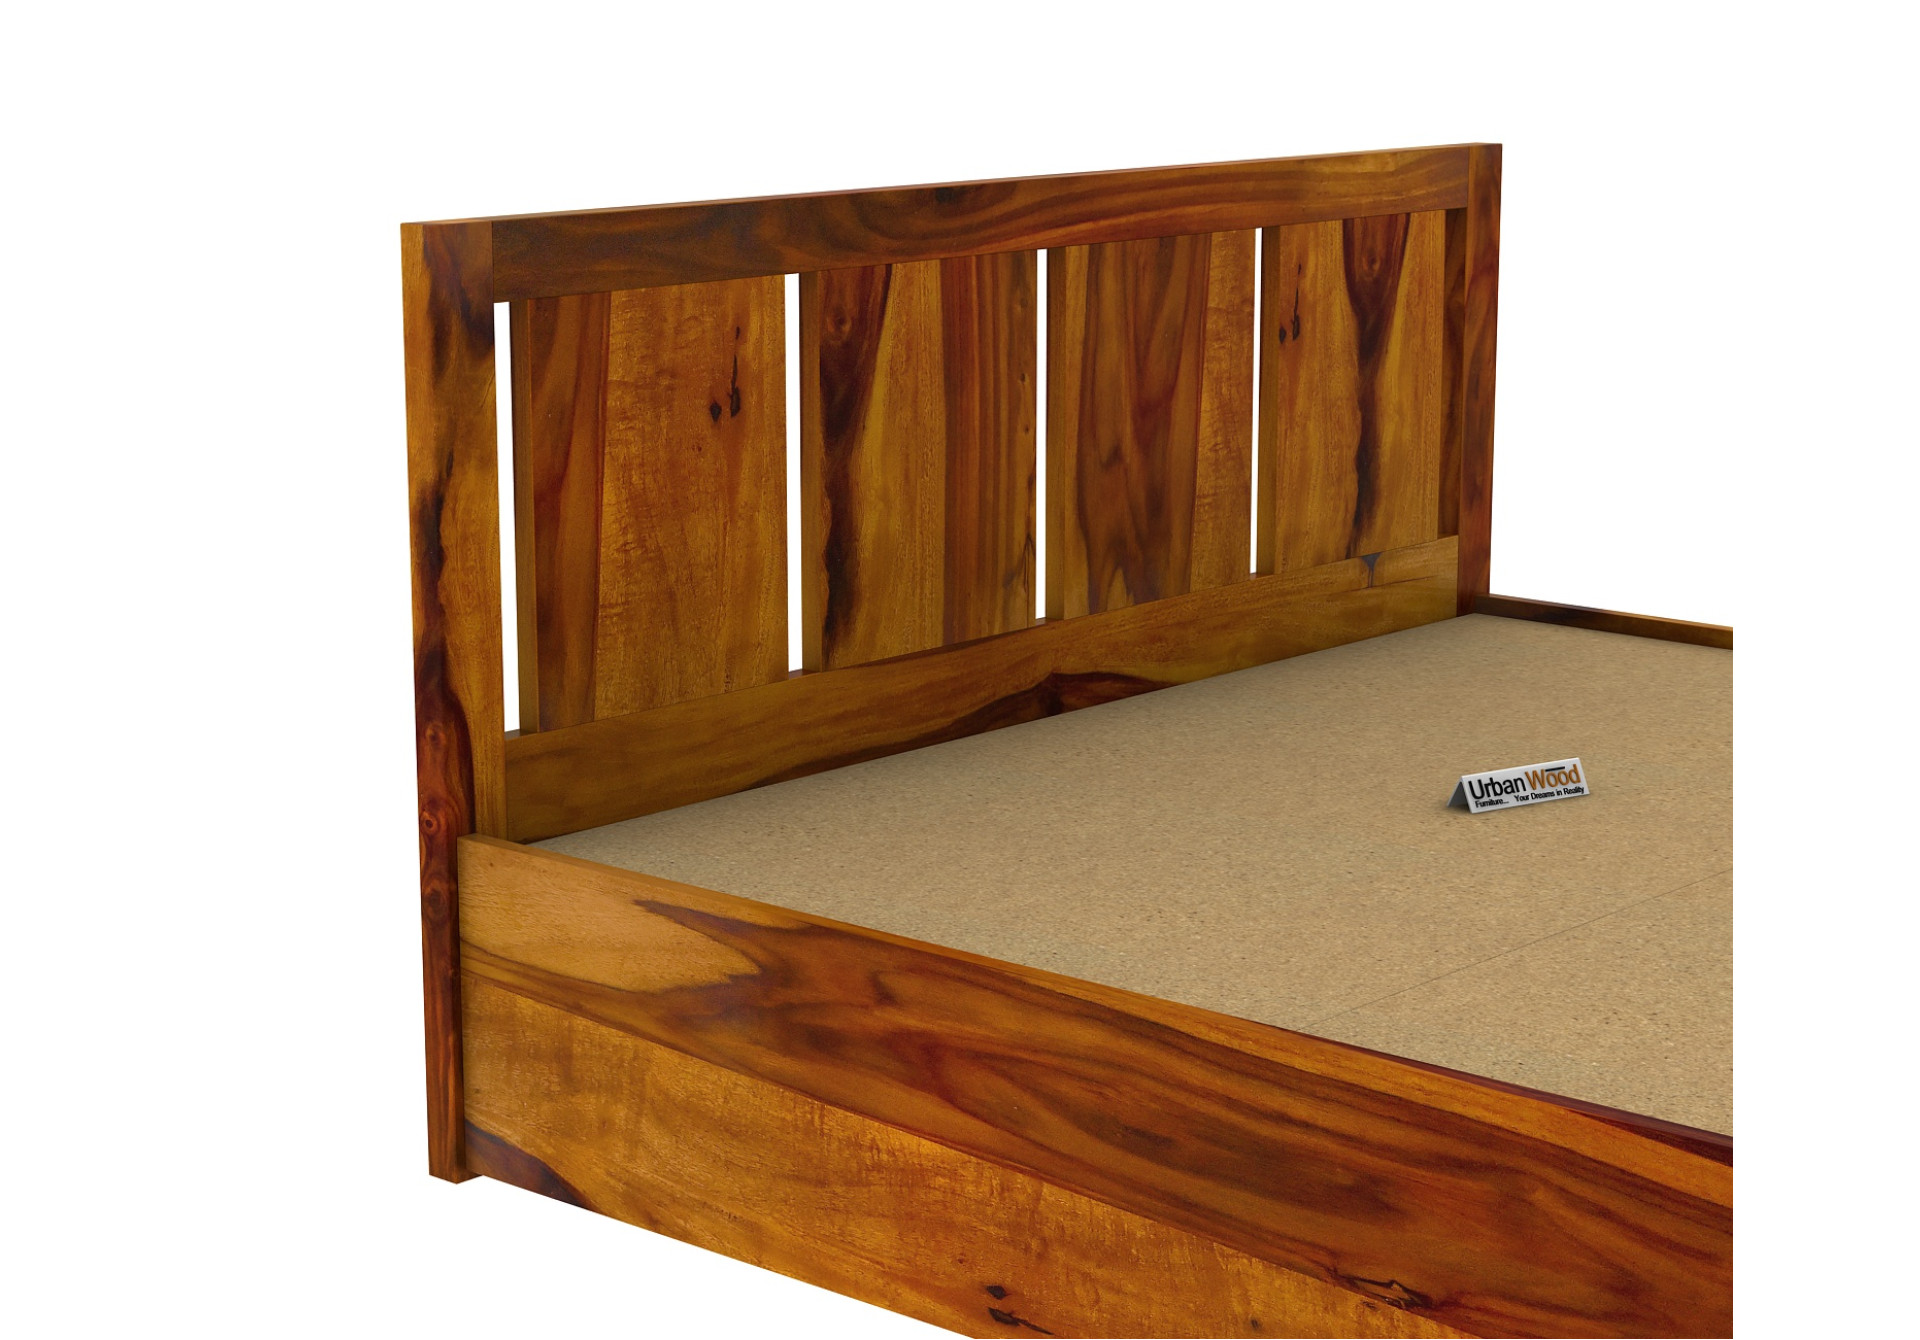 Topaz Hydraulic Storage Bed (King Size, Honey Finish)